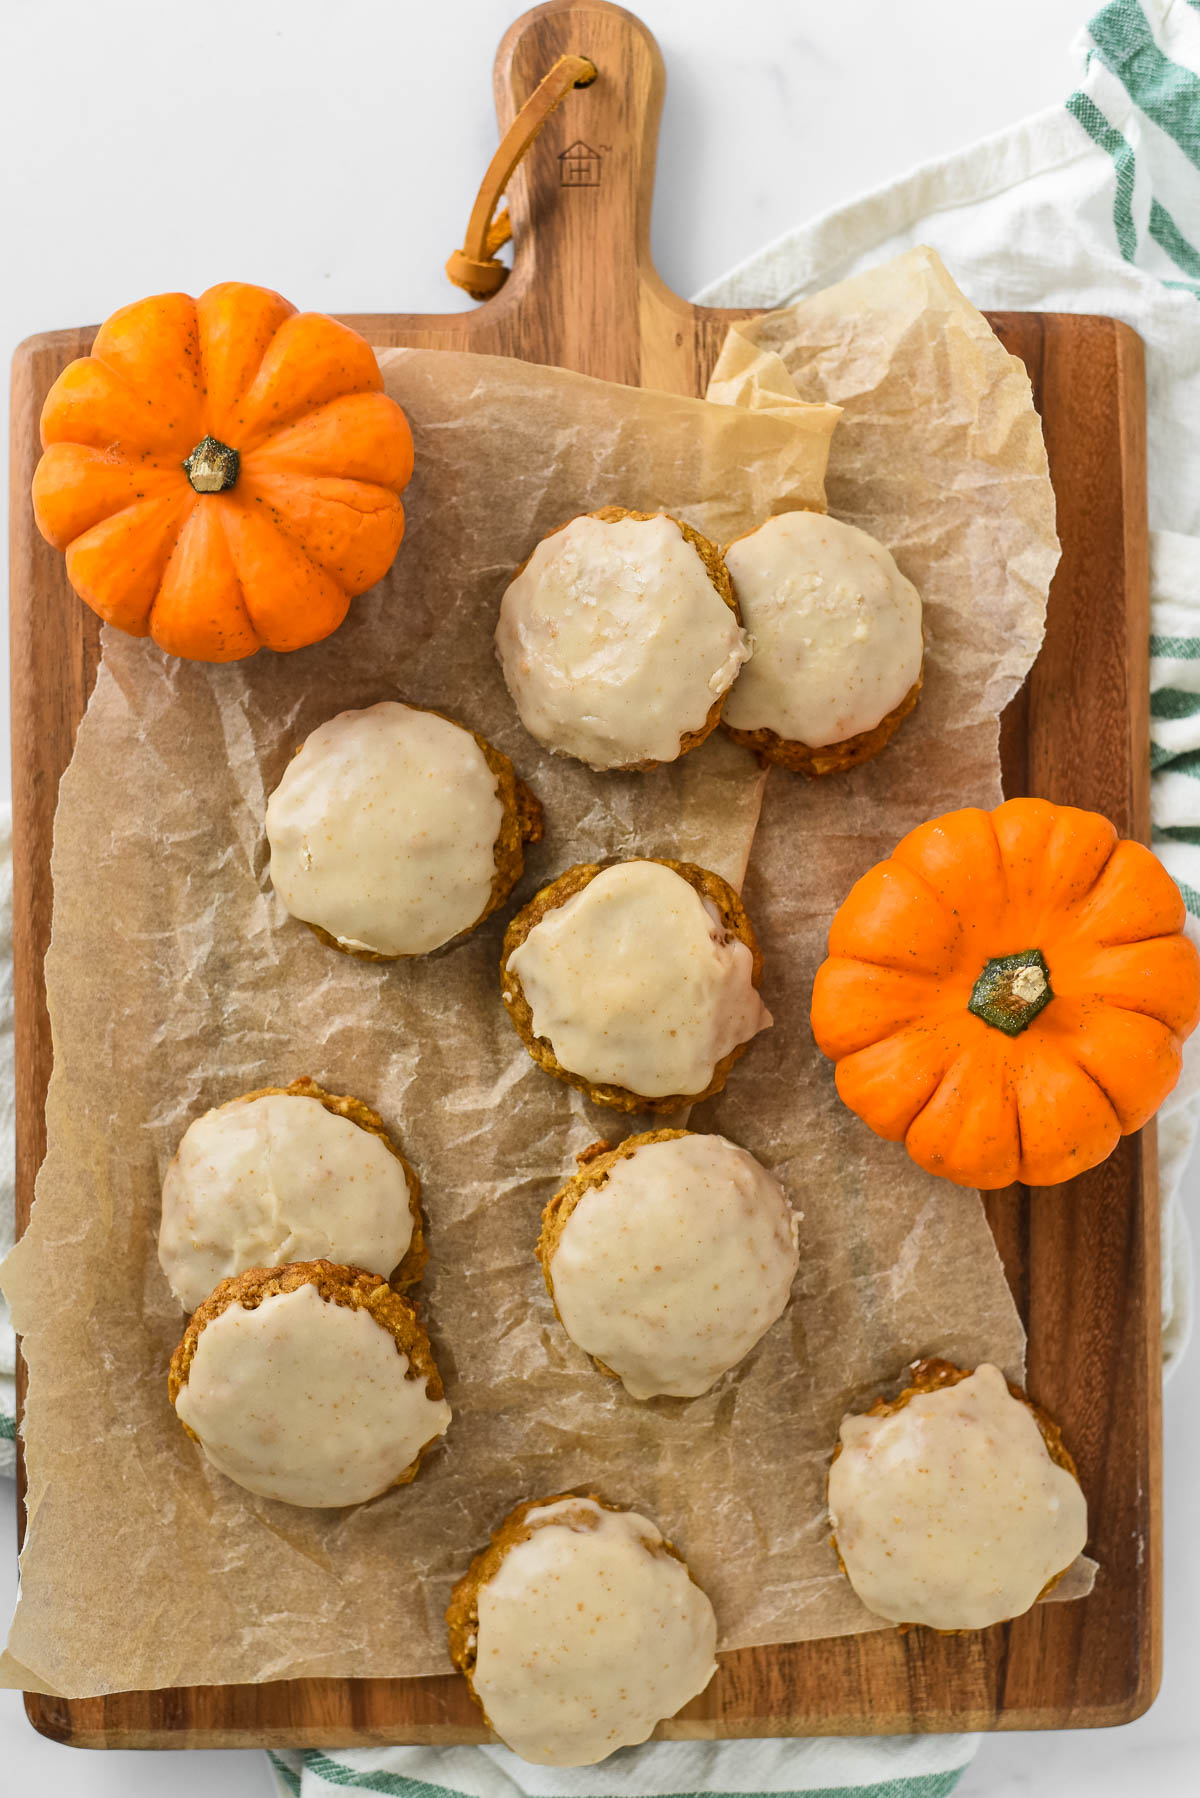 Pumpkin Oatmeal Cookies